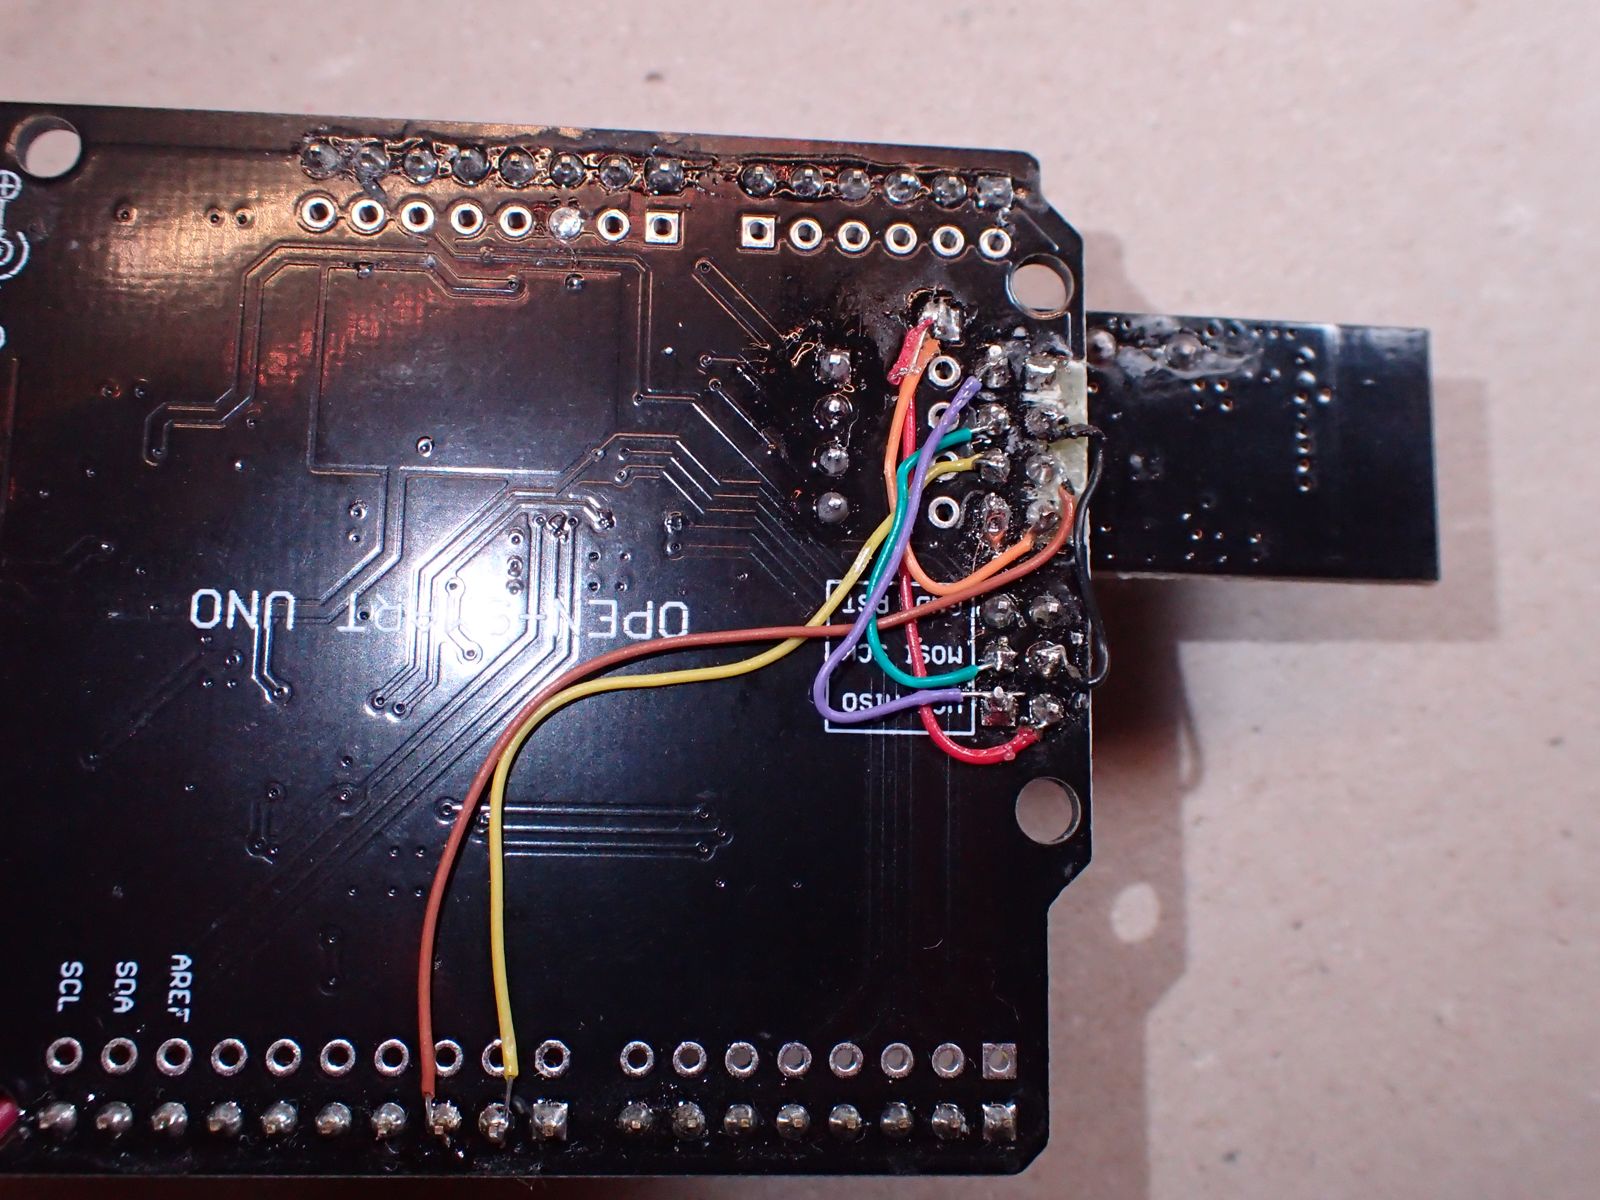 backside of the lightsensor with arduino uno